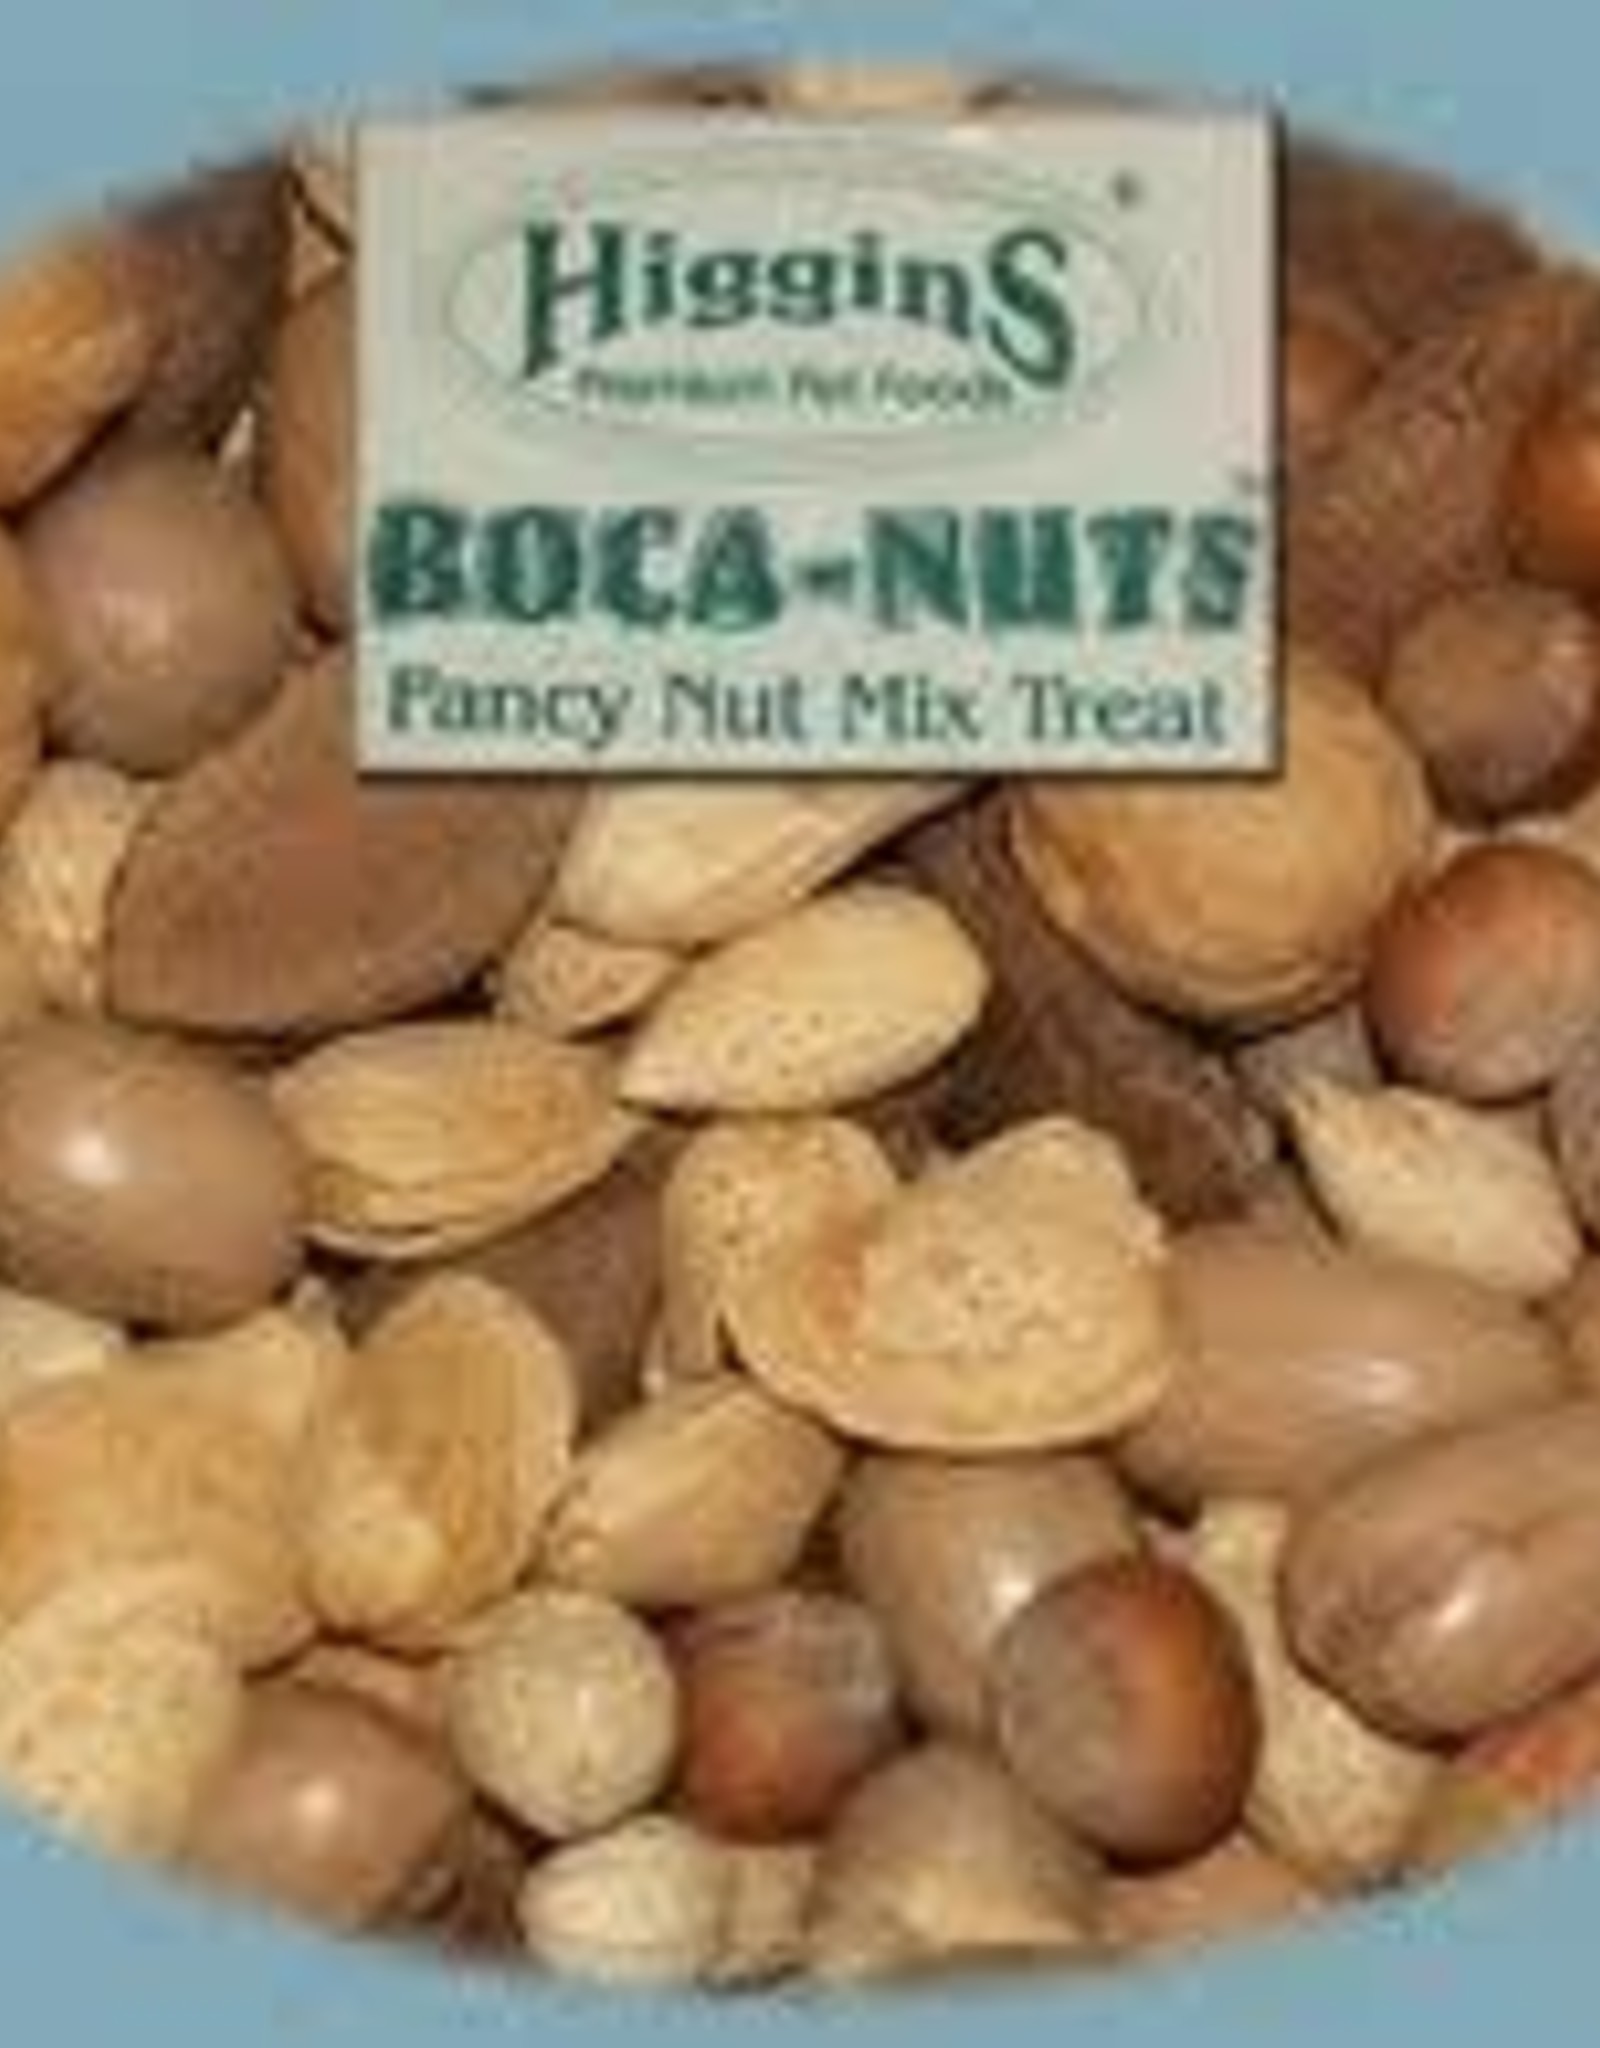 Higgins Sunburst Gourmet Treats Fruit to Nuts